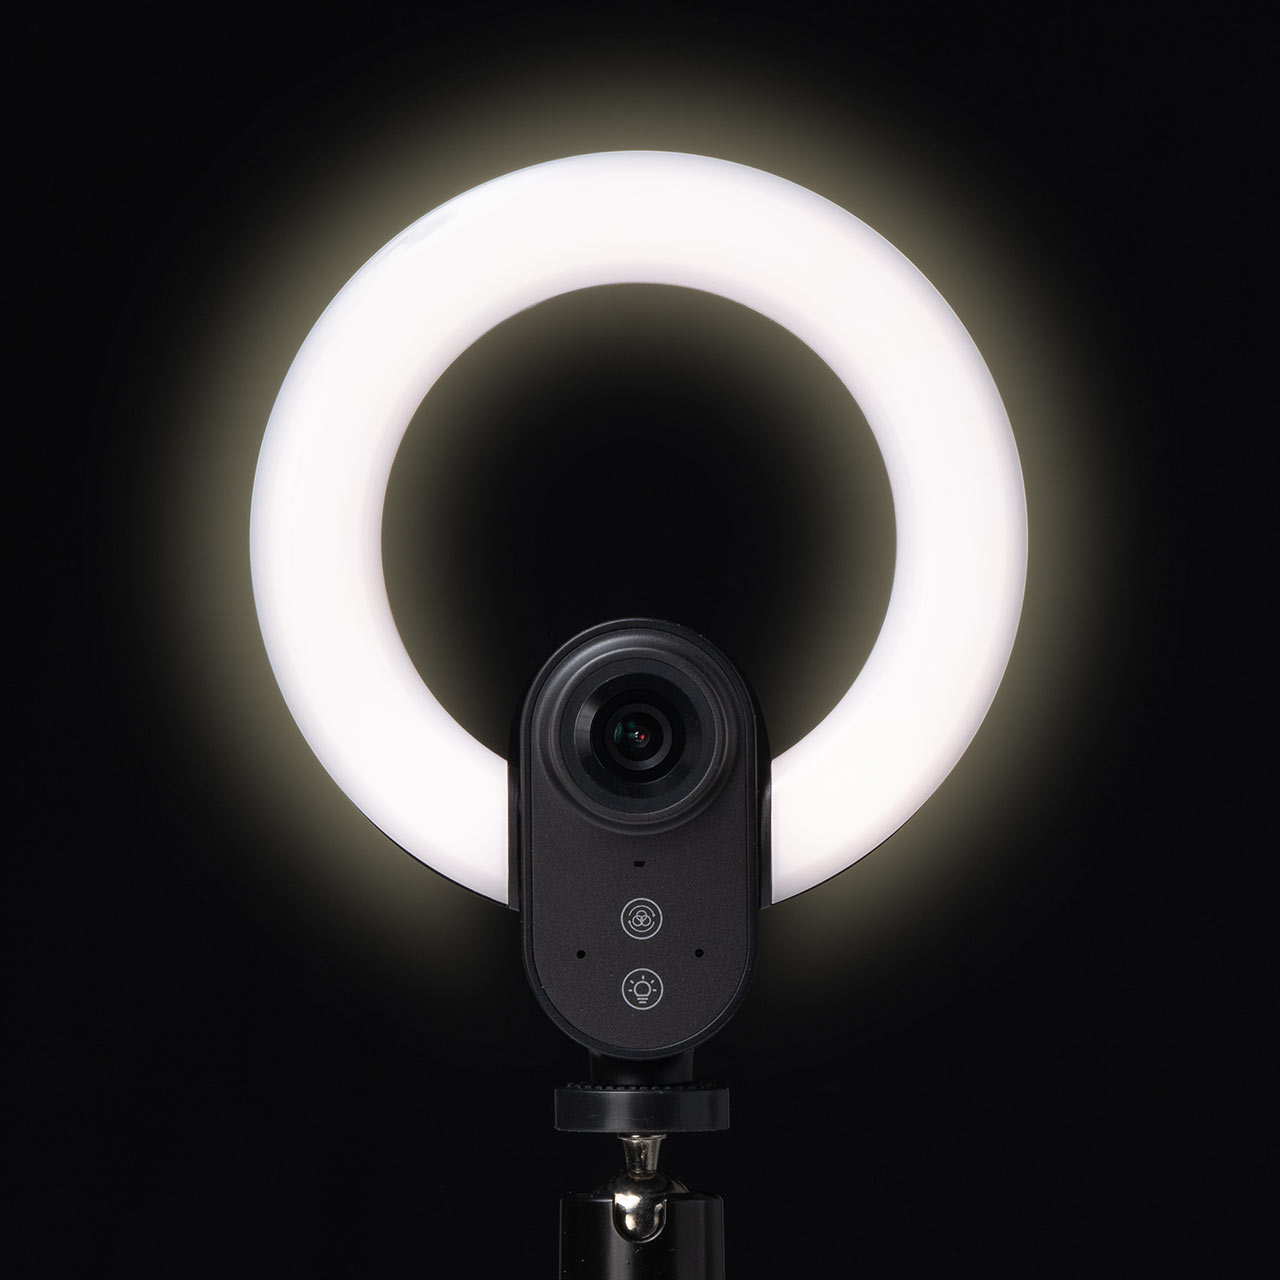 LEDリングライト付き WEBカメラ 1080p 3光色 画角84° オートフォーカス マイクなし スタンド付属 Zoom/Teams/Skypeなど対応 400-CAM100